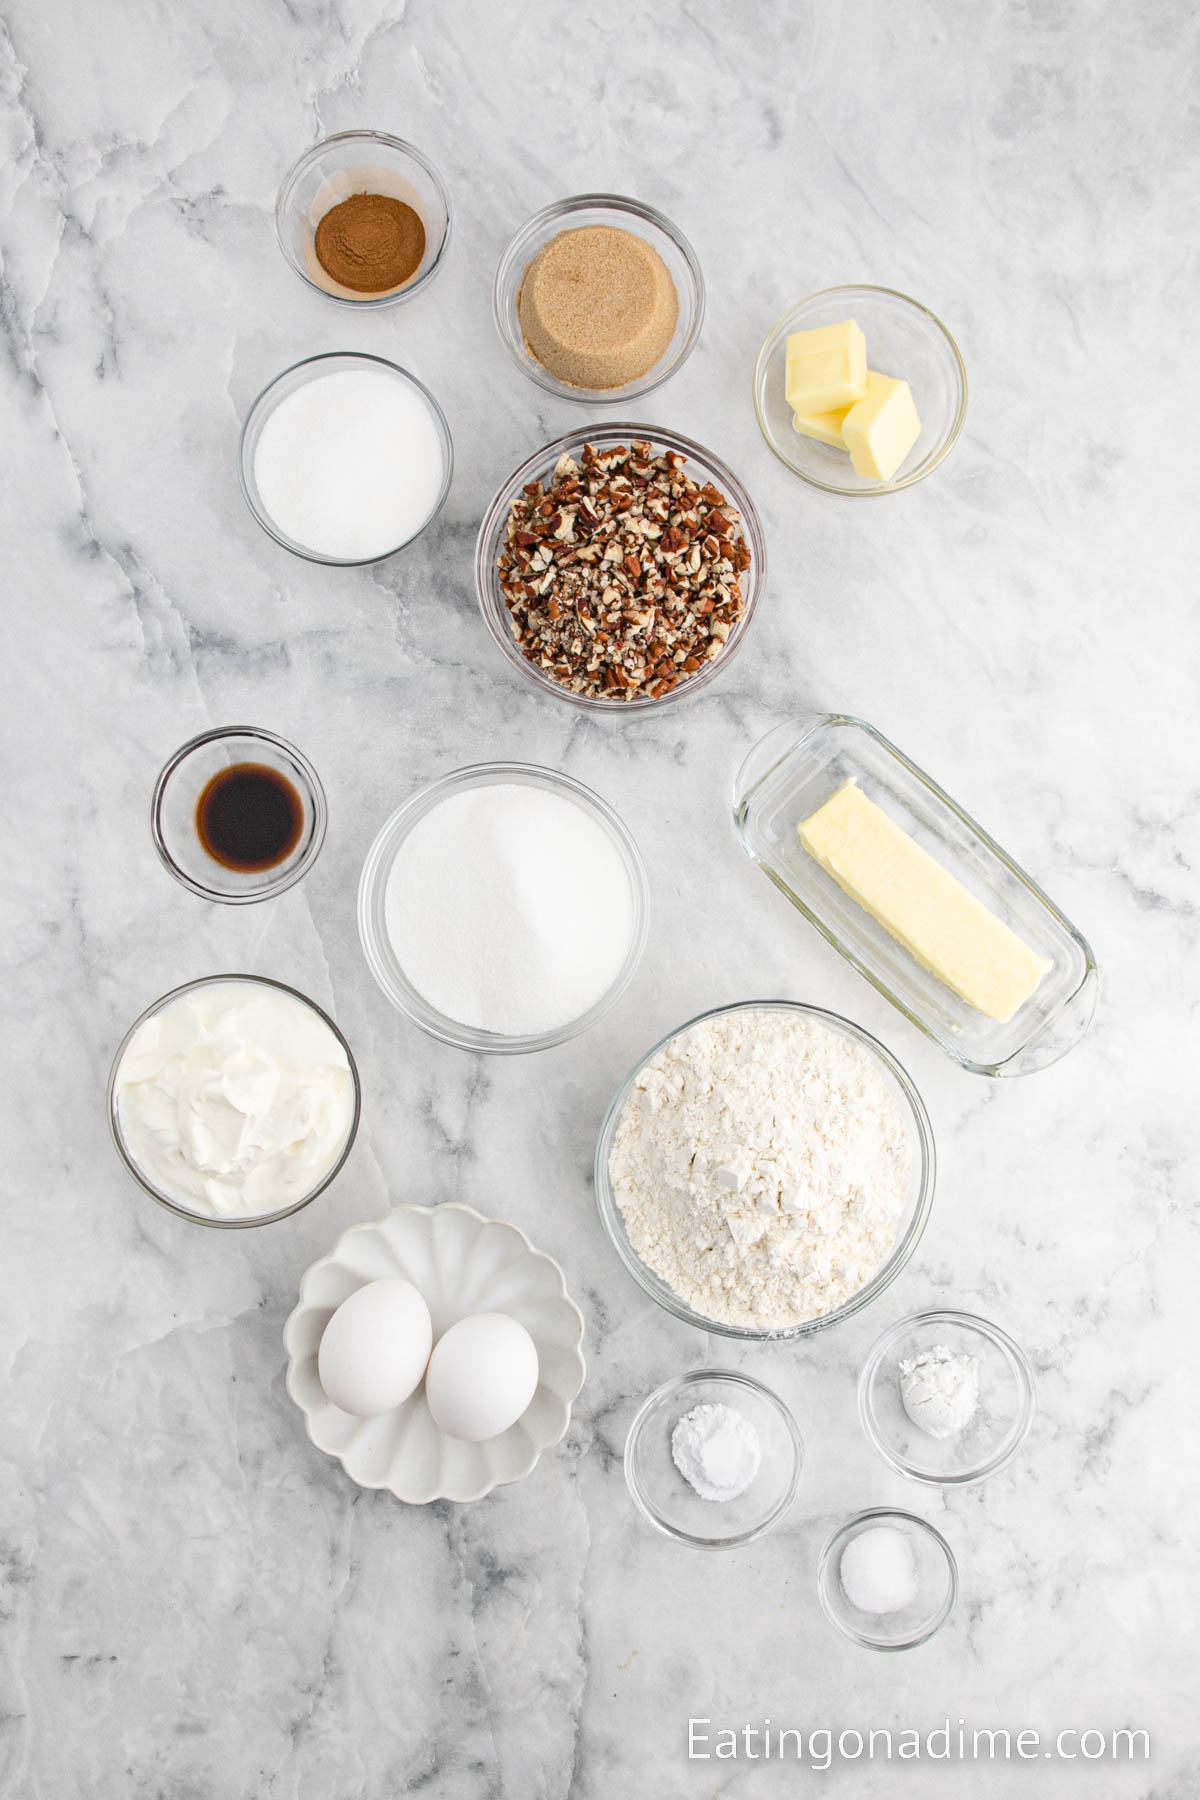 Ingredients for coffee cake- Flour, baking powder, baking soda, salt, sugar, butter, eggs, sour cream, vanilla extract, pecans, brown sugar, cinnamon